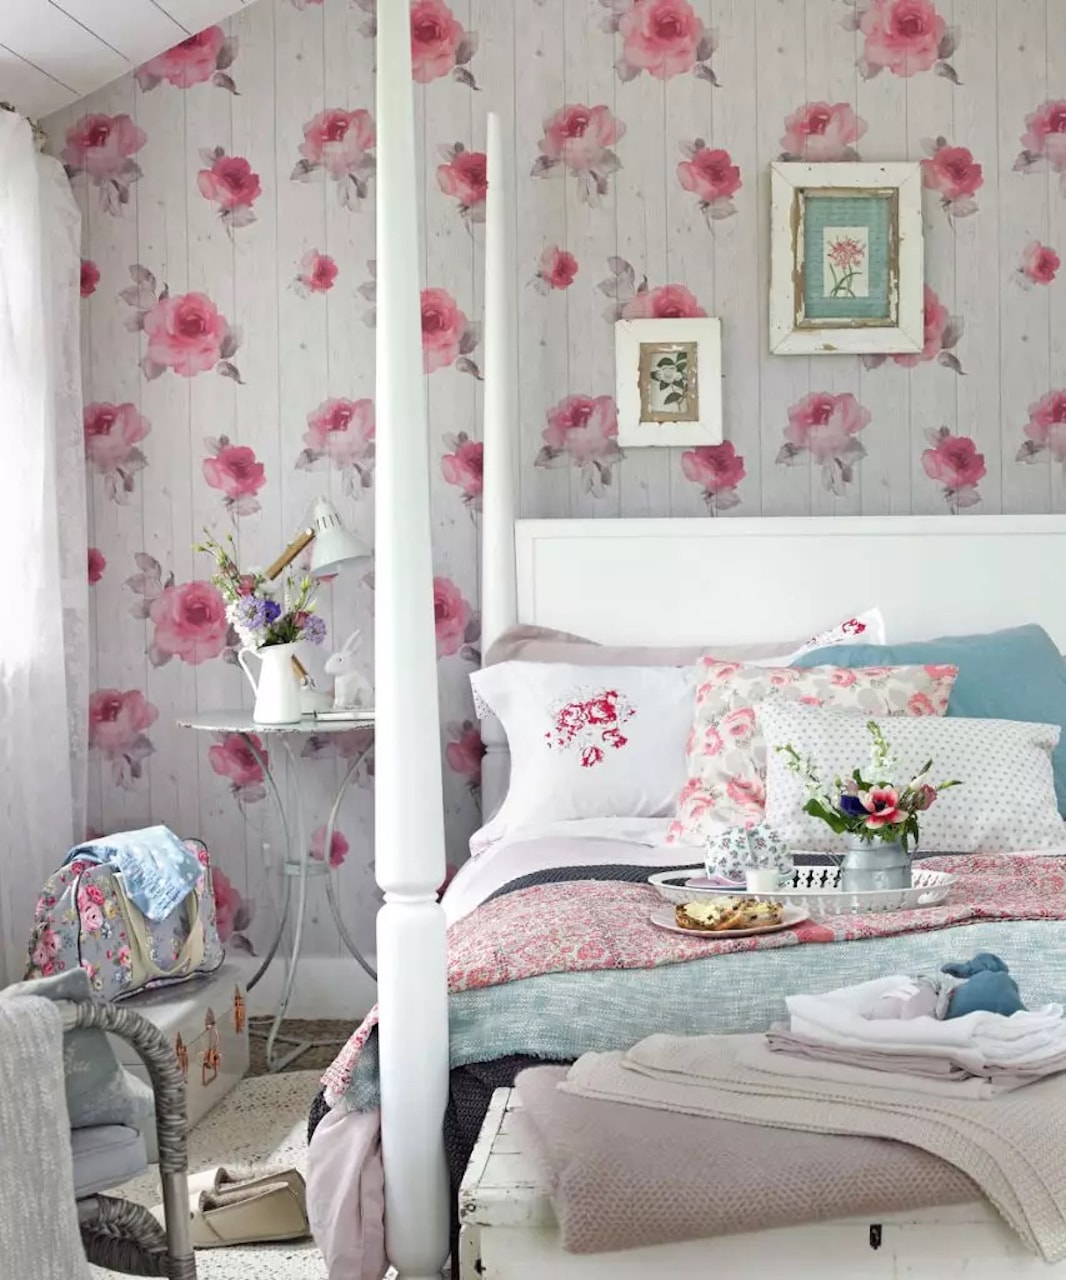 cottagecore aesthetic interior design romantic bedroom